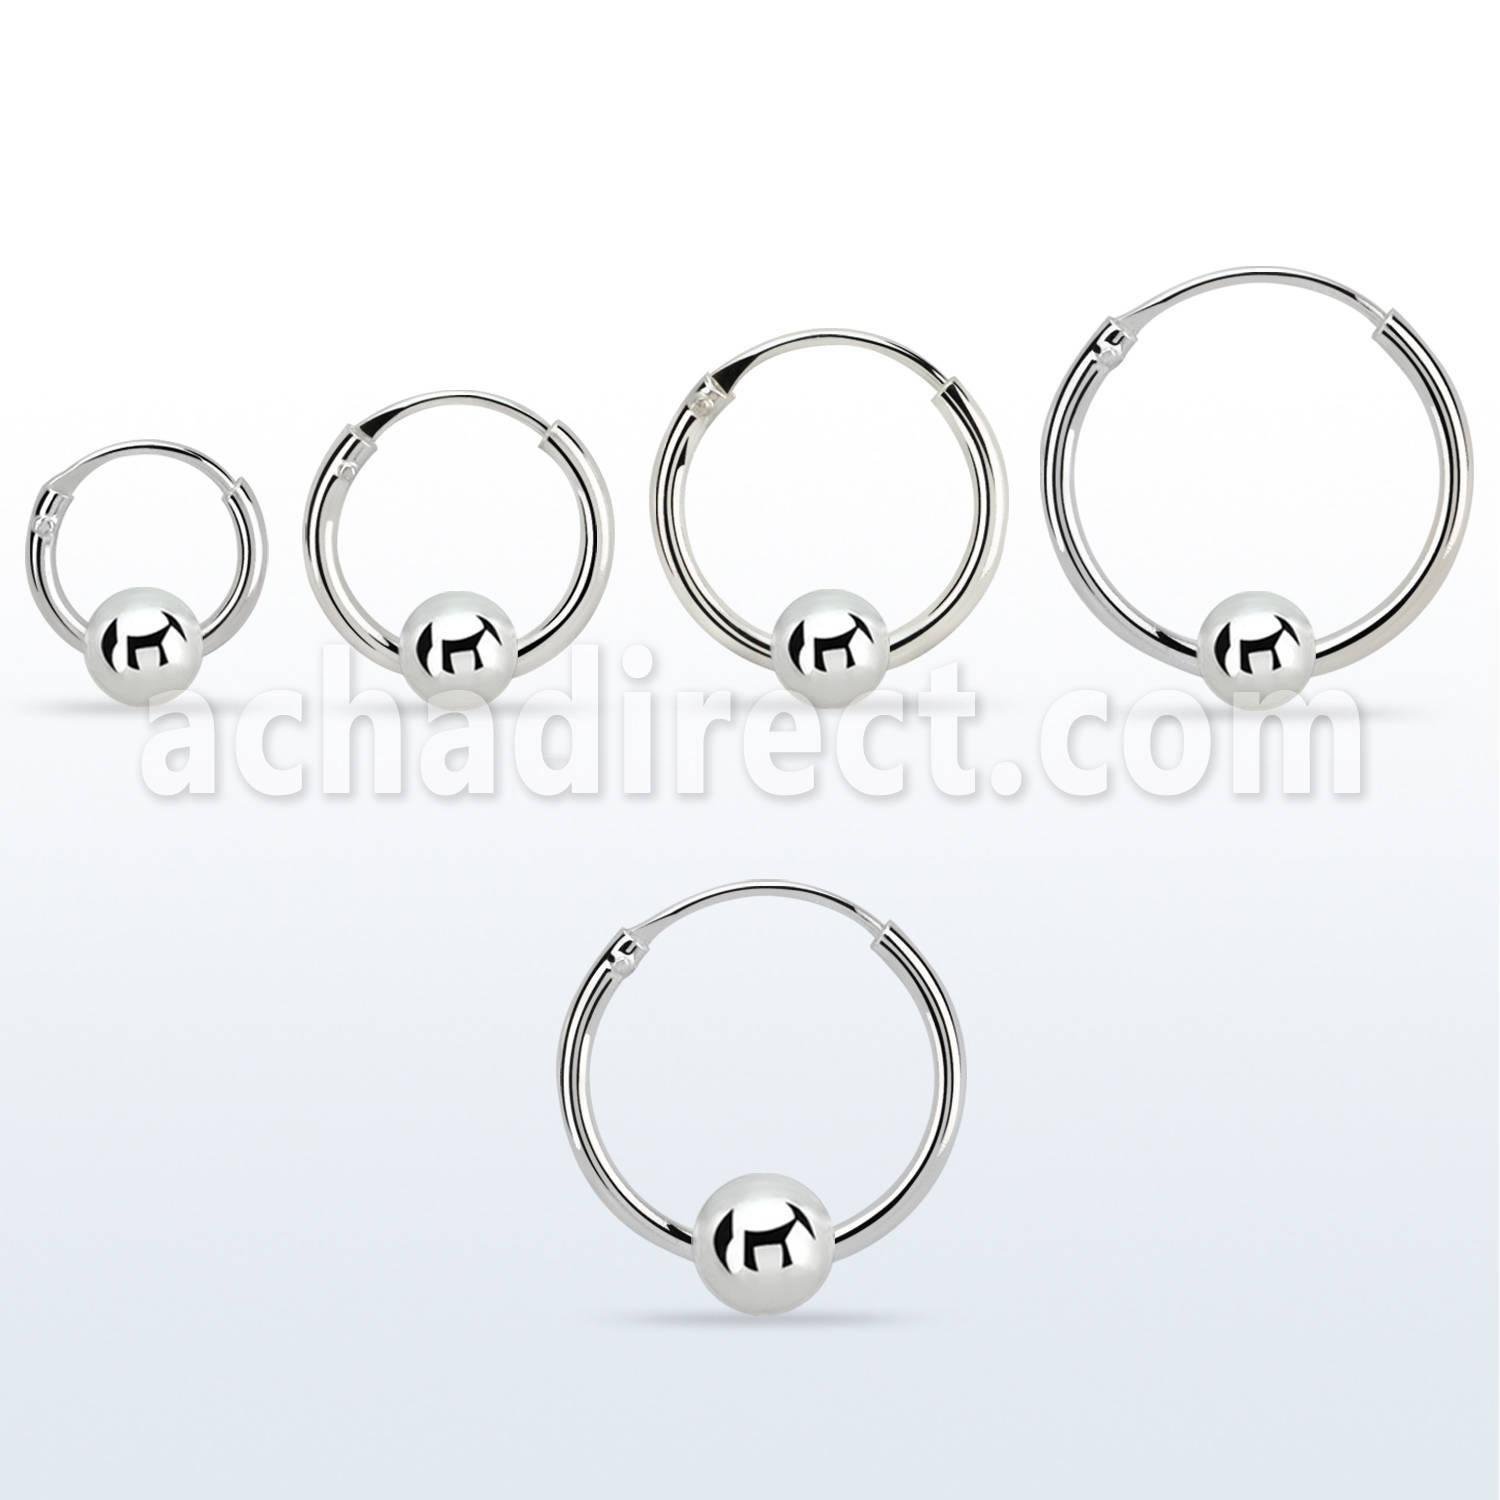 925 silver ball closure earrings 16g (1.2mm)